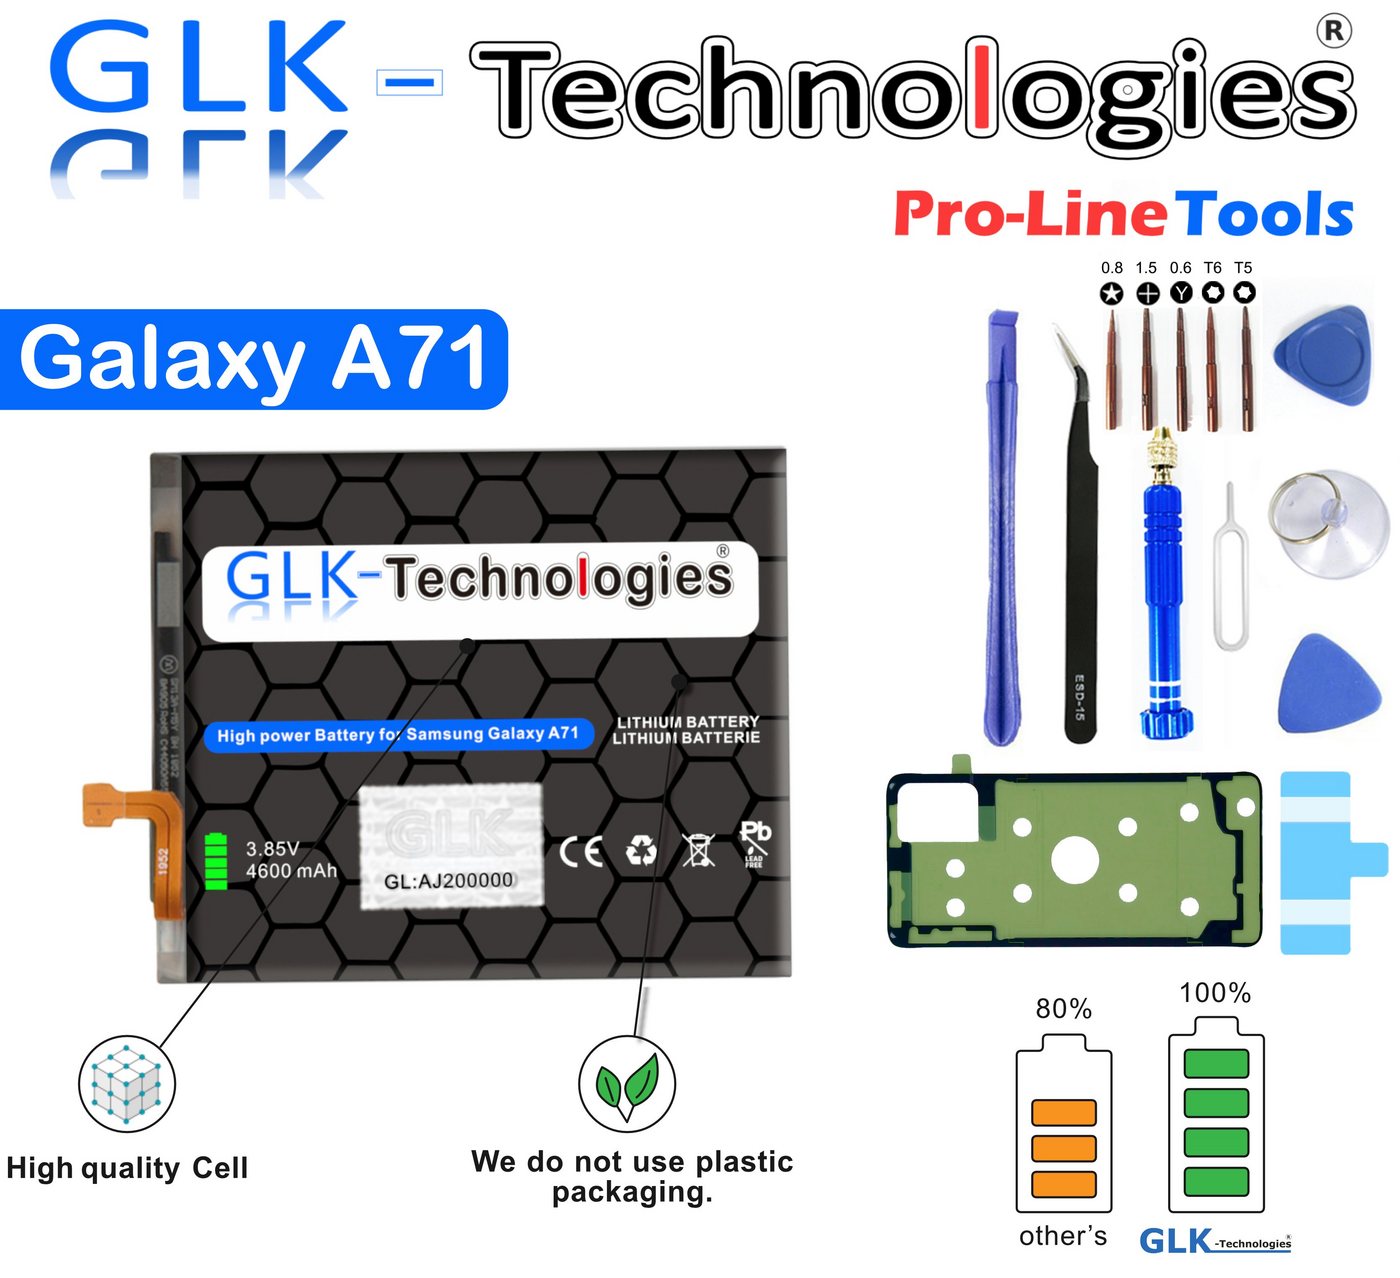 GLK-Technologies High Power Ersatzakku kompatibel mit Samsung Galaxy A71 SM-A715F / Dual-SIM, GLK-Technologies Battery, accu, 4600 mAh Akku, inkl. Profi Werkzeug Set Kit NUE Handy-Akku (3,85 V) von GLK-Technologies